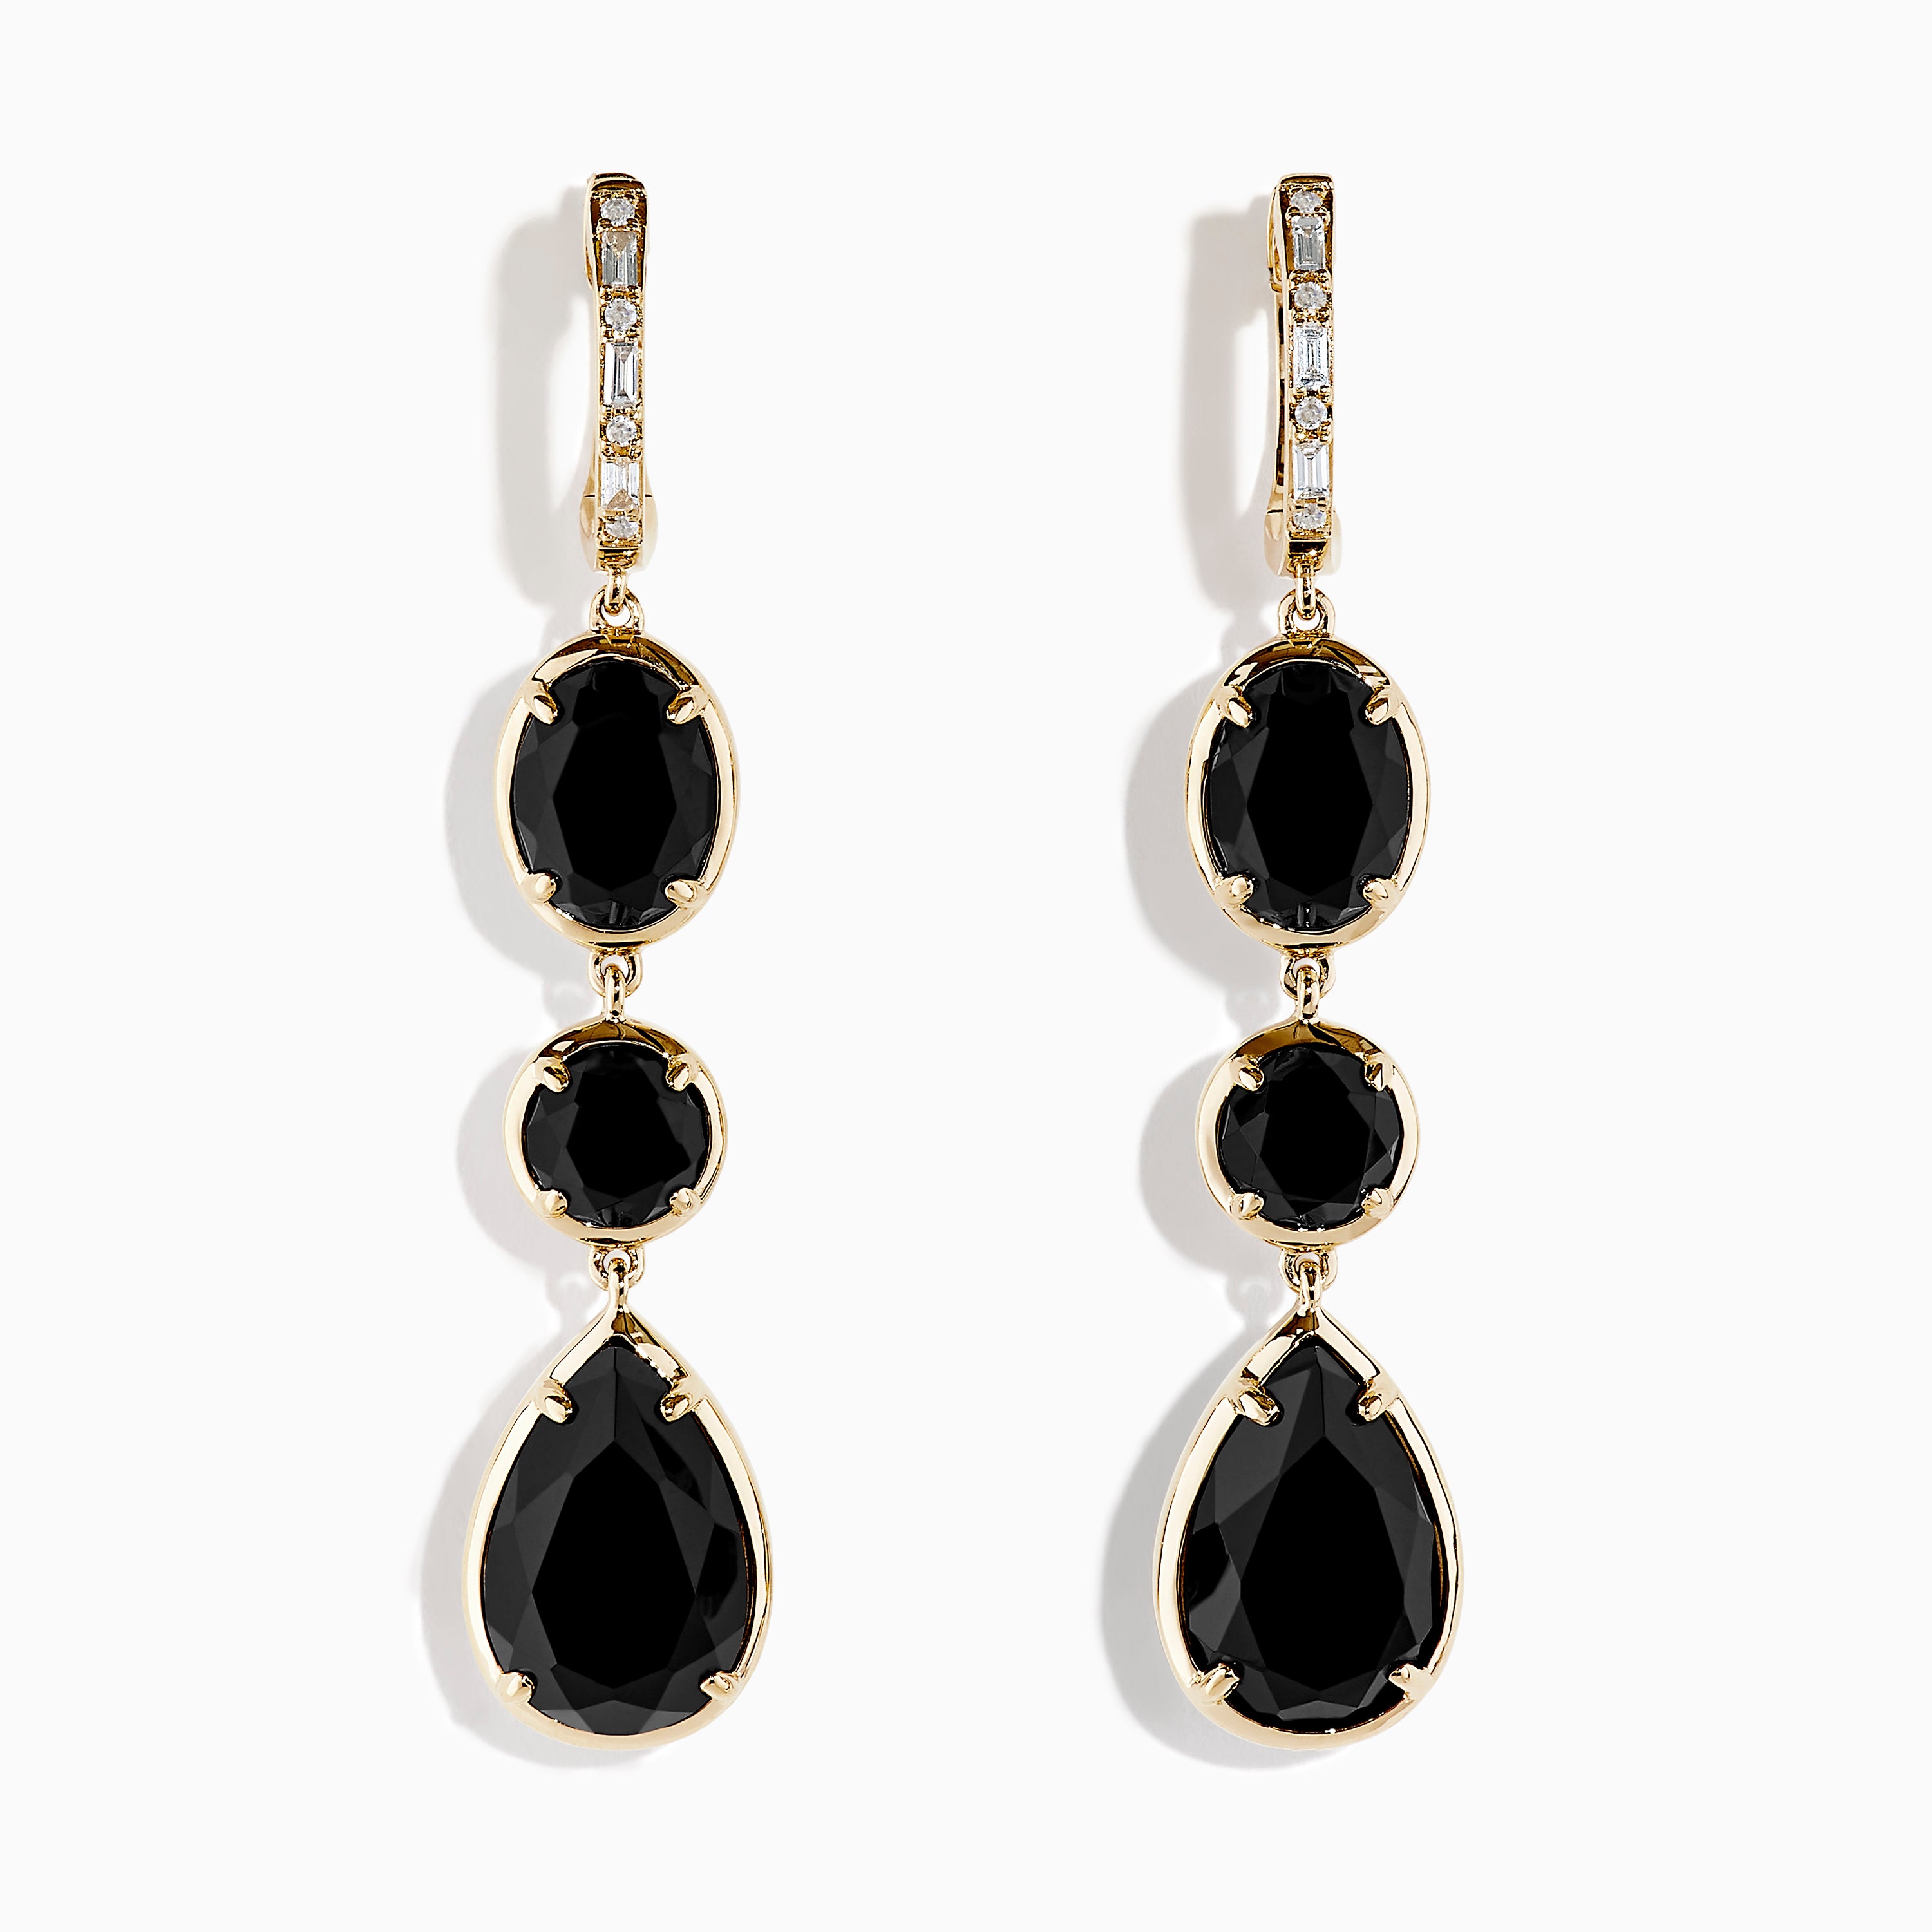 Gold Drop Earrings | Drop earrings, Gold rings fashion, Gold jewelry fashion